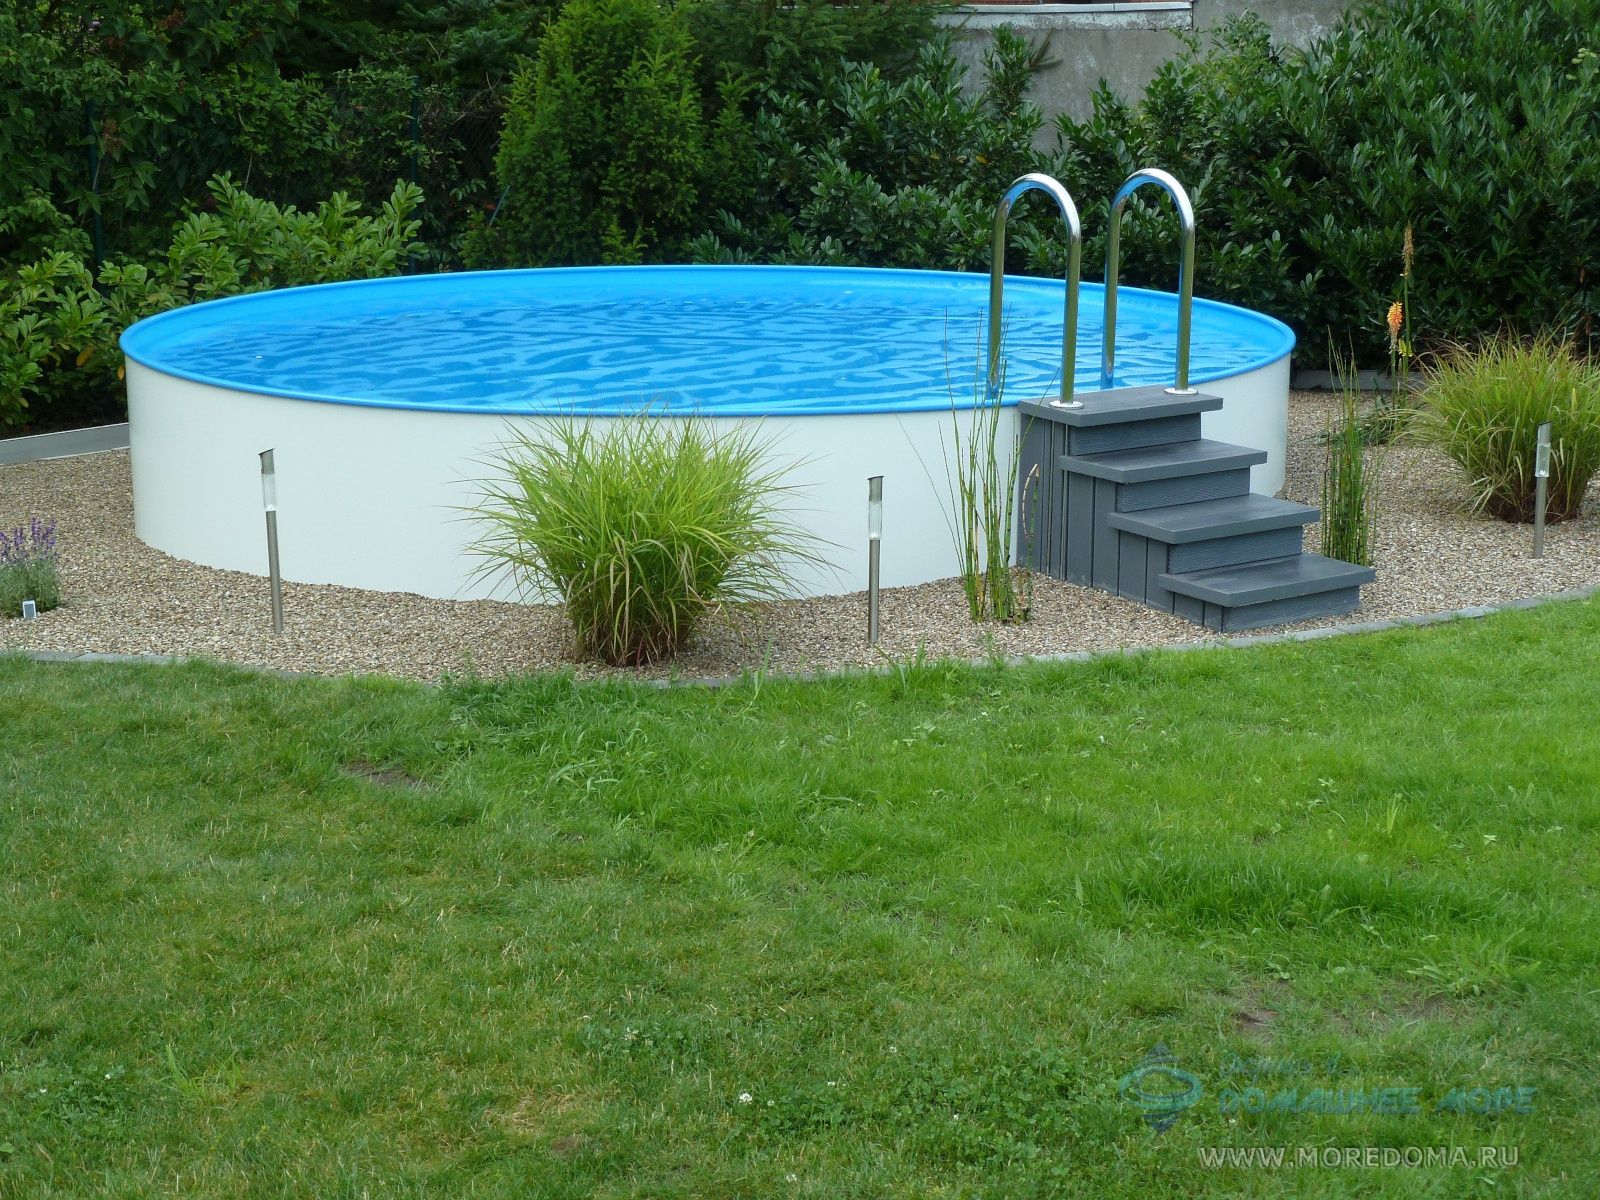 501010170-KB Каркасный бассейн Summer Fun (круг) 3,5 х 1,5м, арт. 501010170-KB диаметр 3.5 высота 1.5  